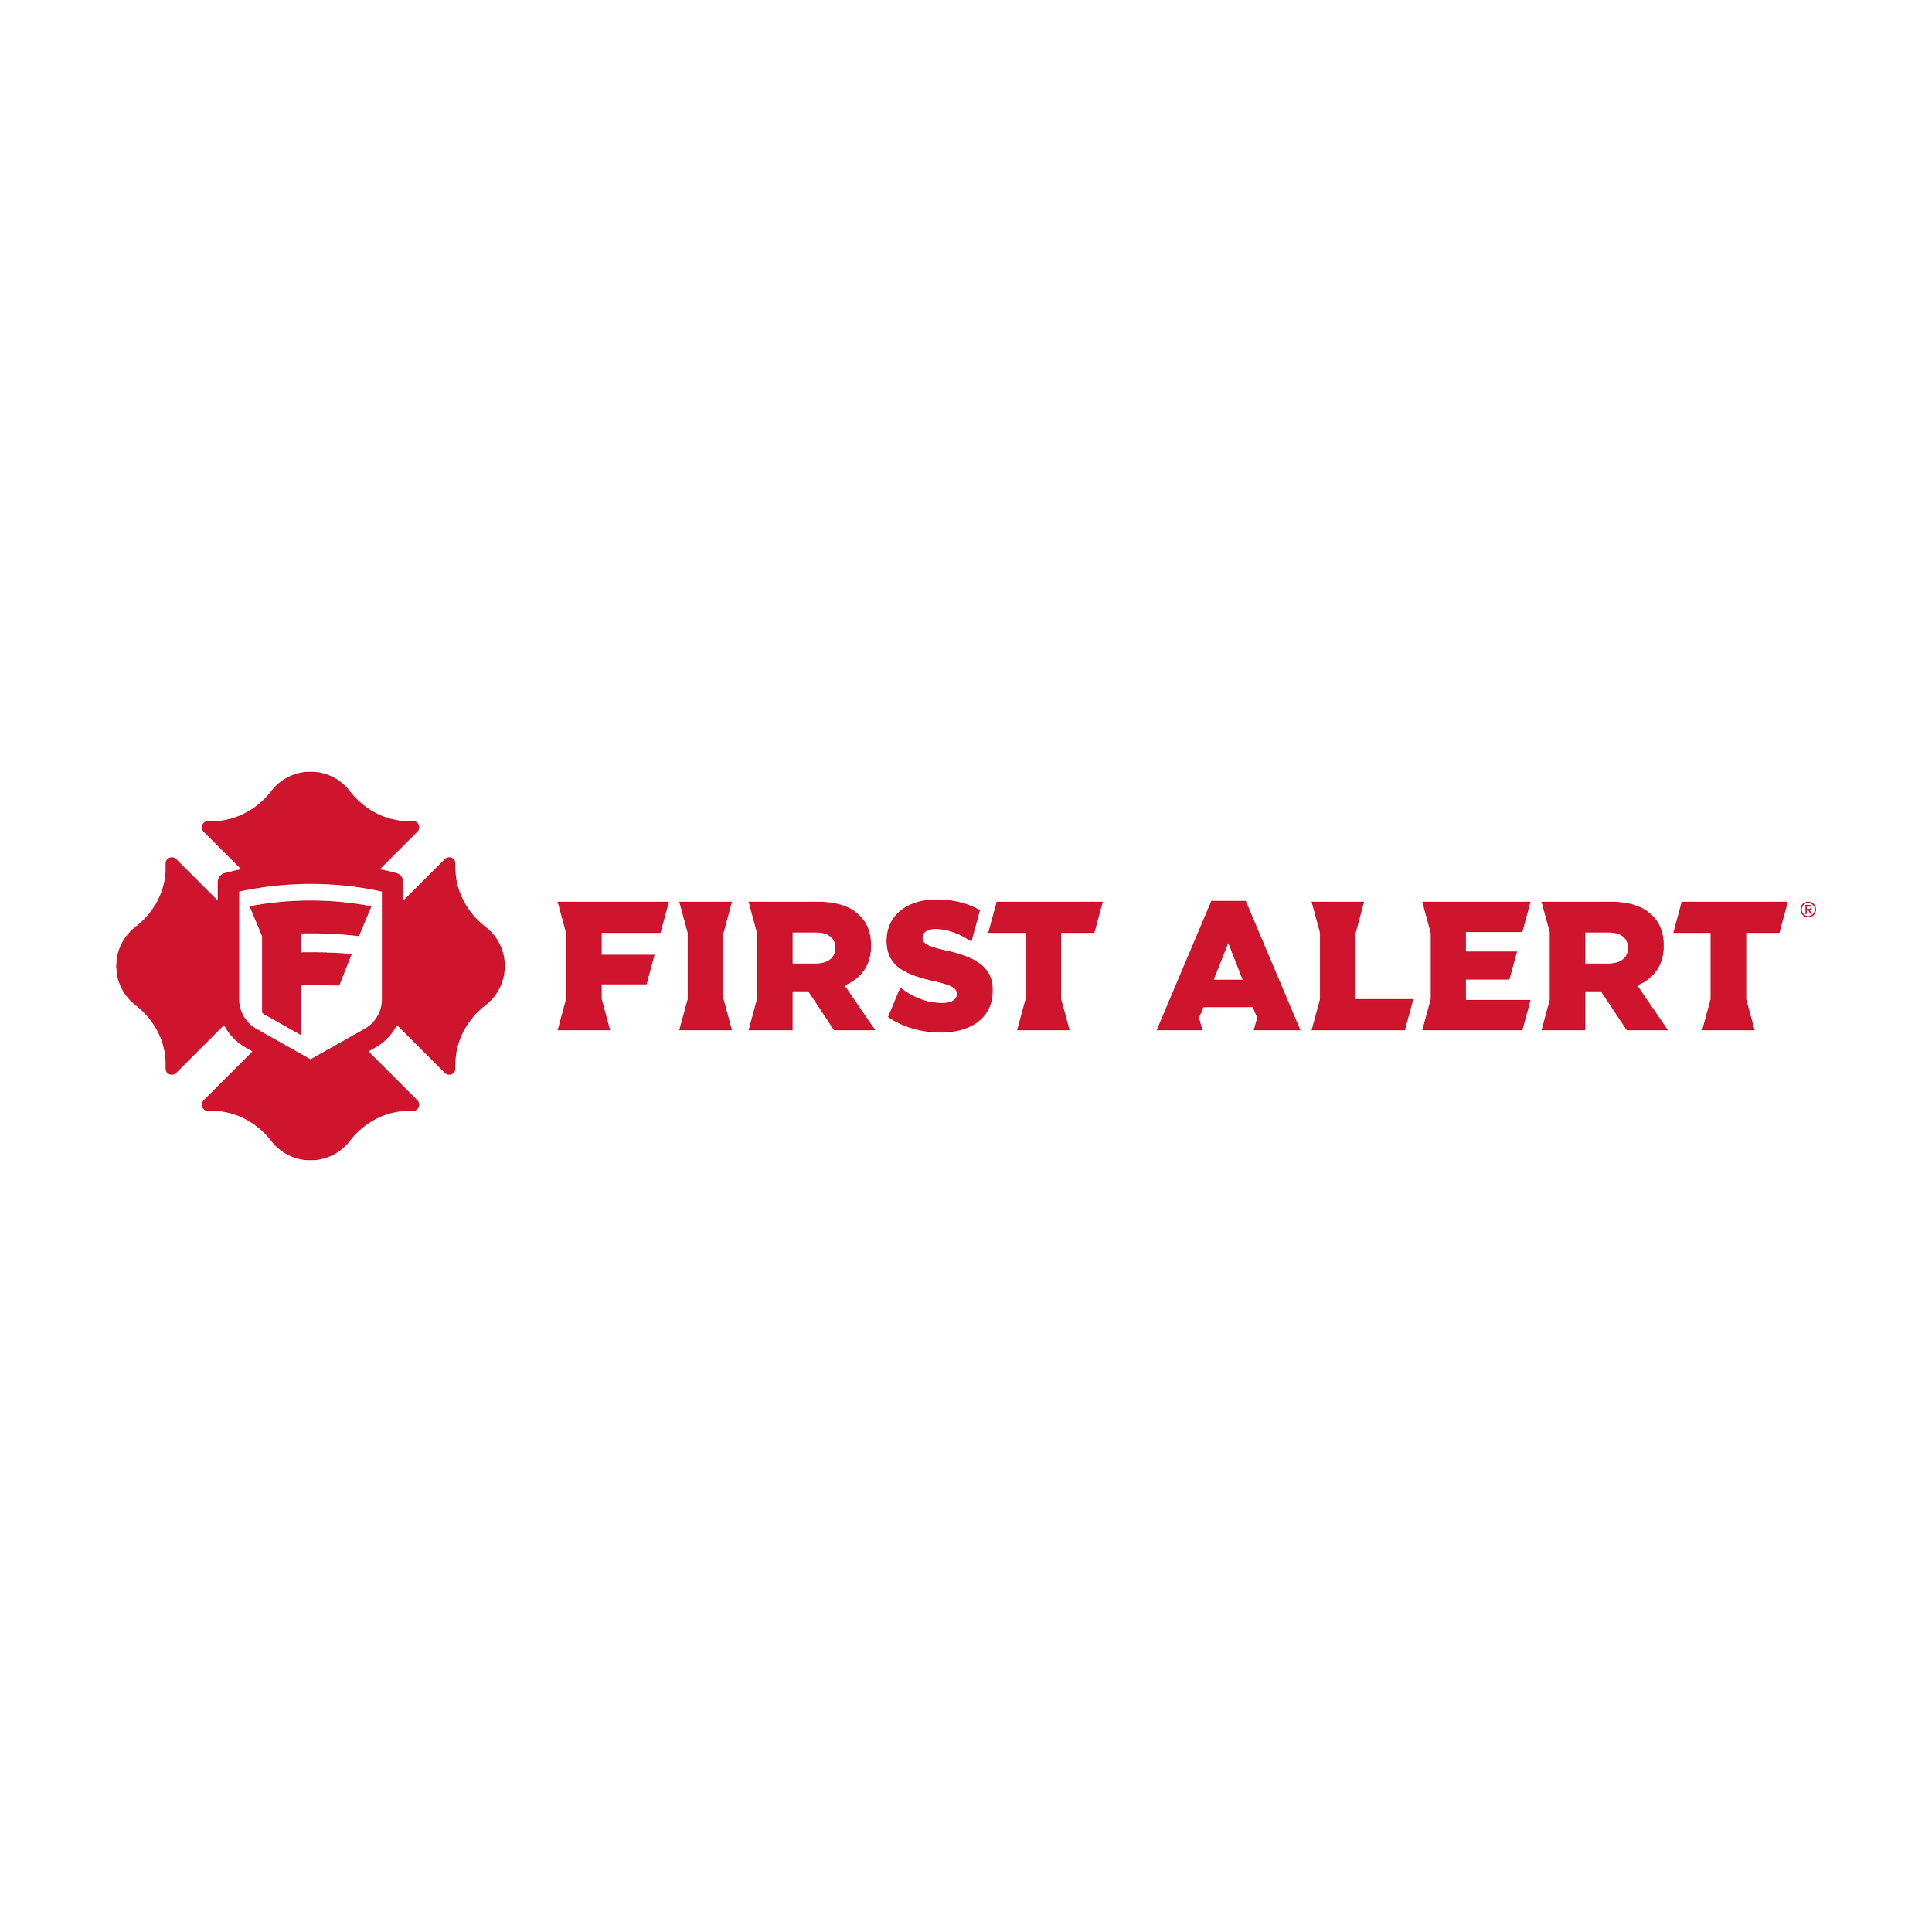 First Alert logo - horizontal - color - R.png